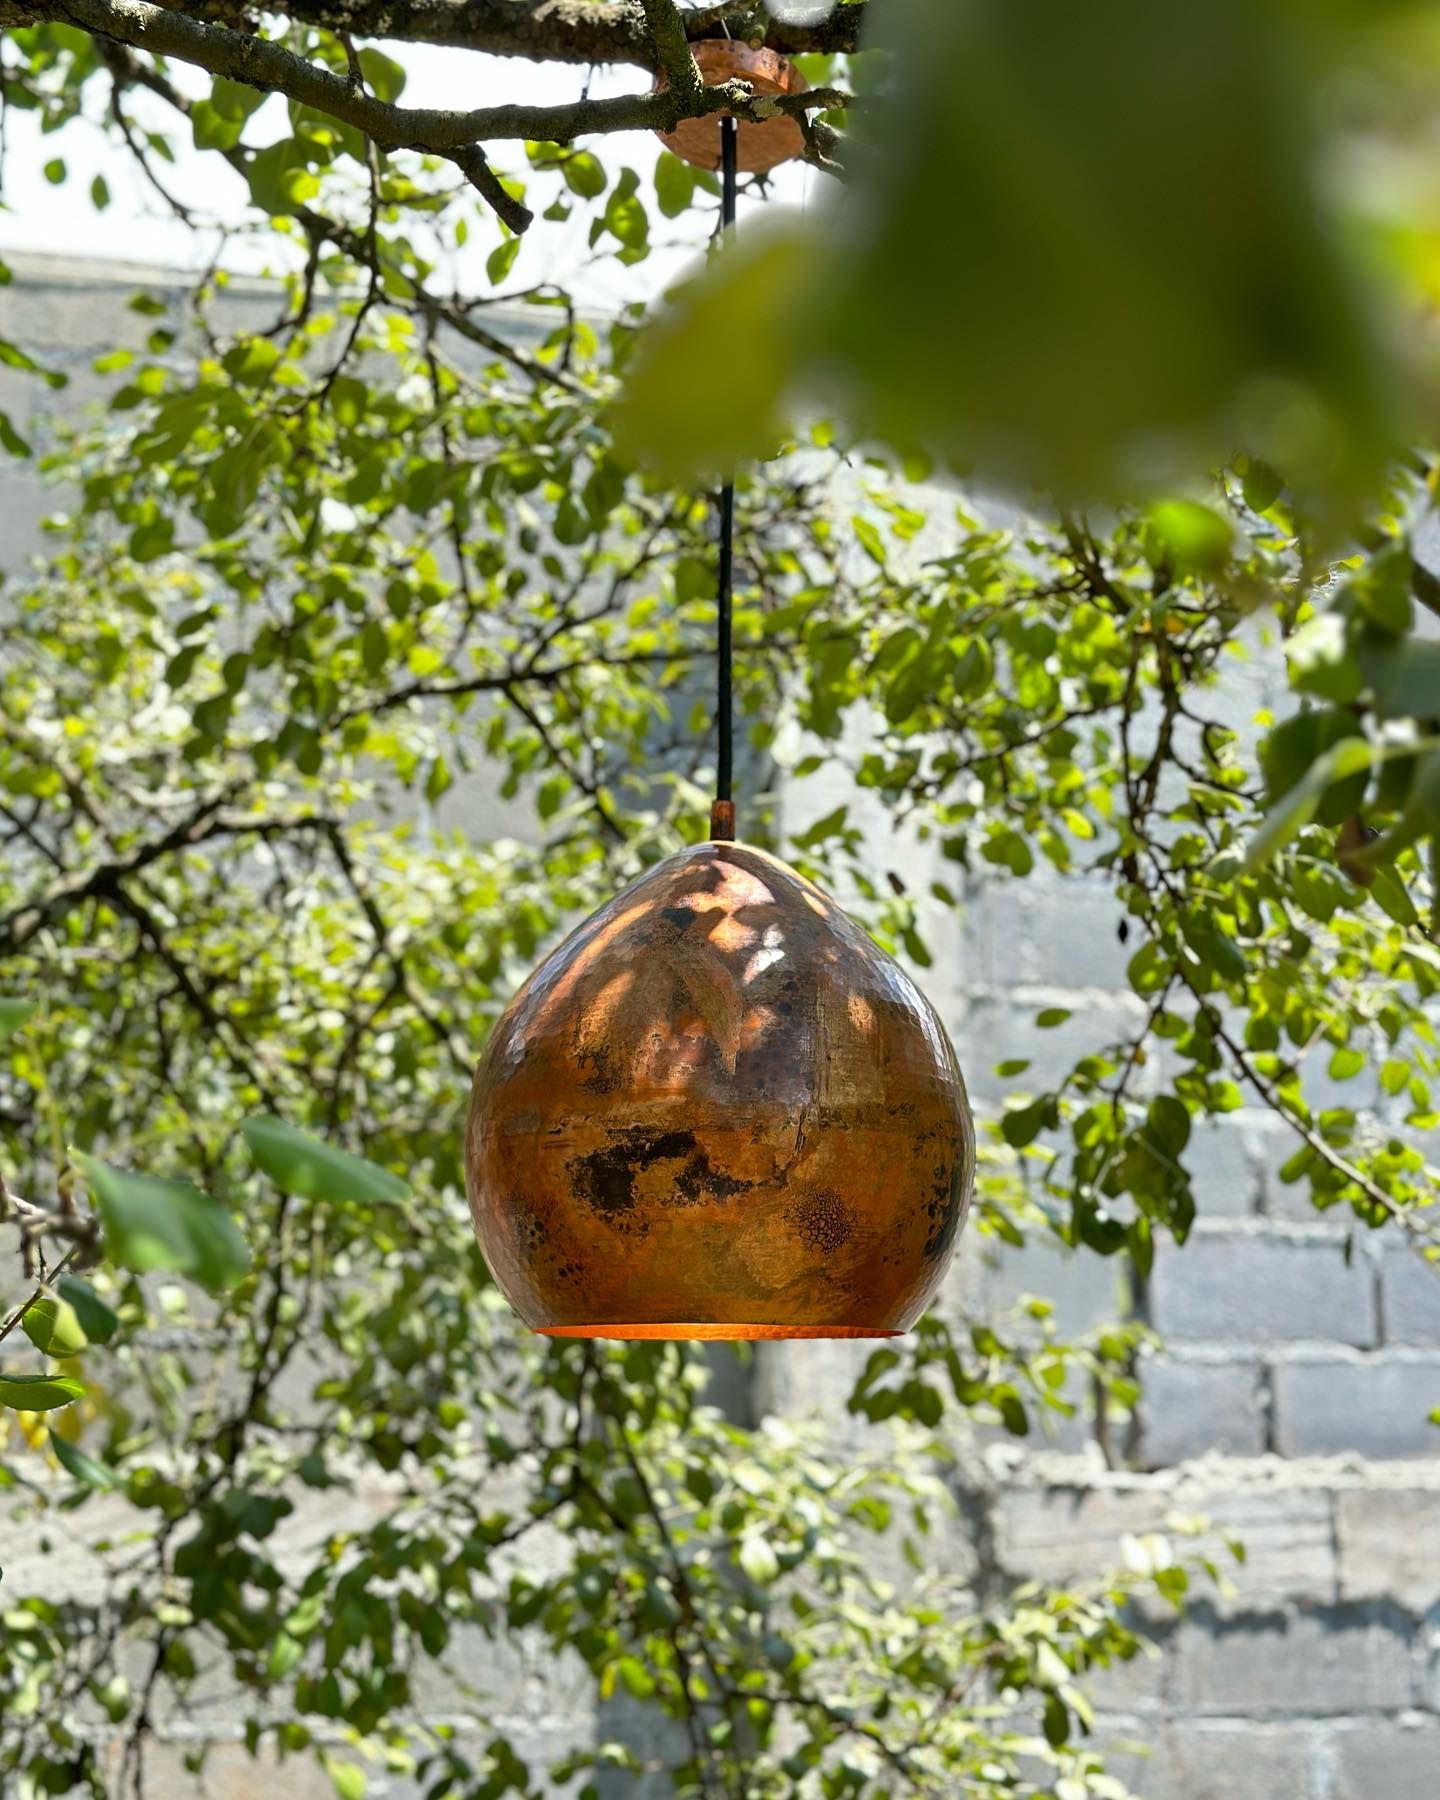 Copper Handmade pendant Light - Copper Lamp Shade - Zyla - Zayian